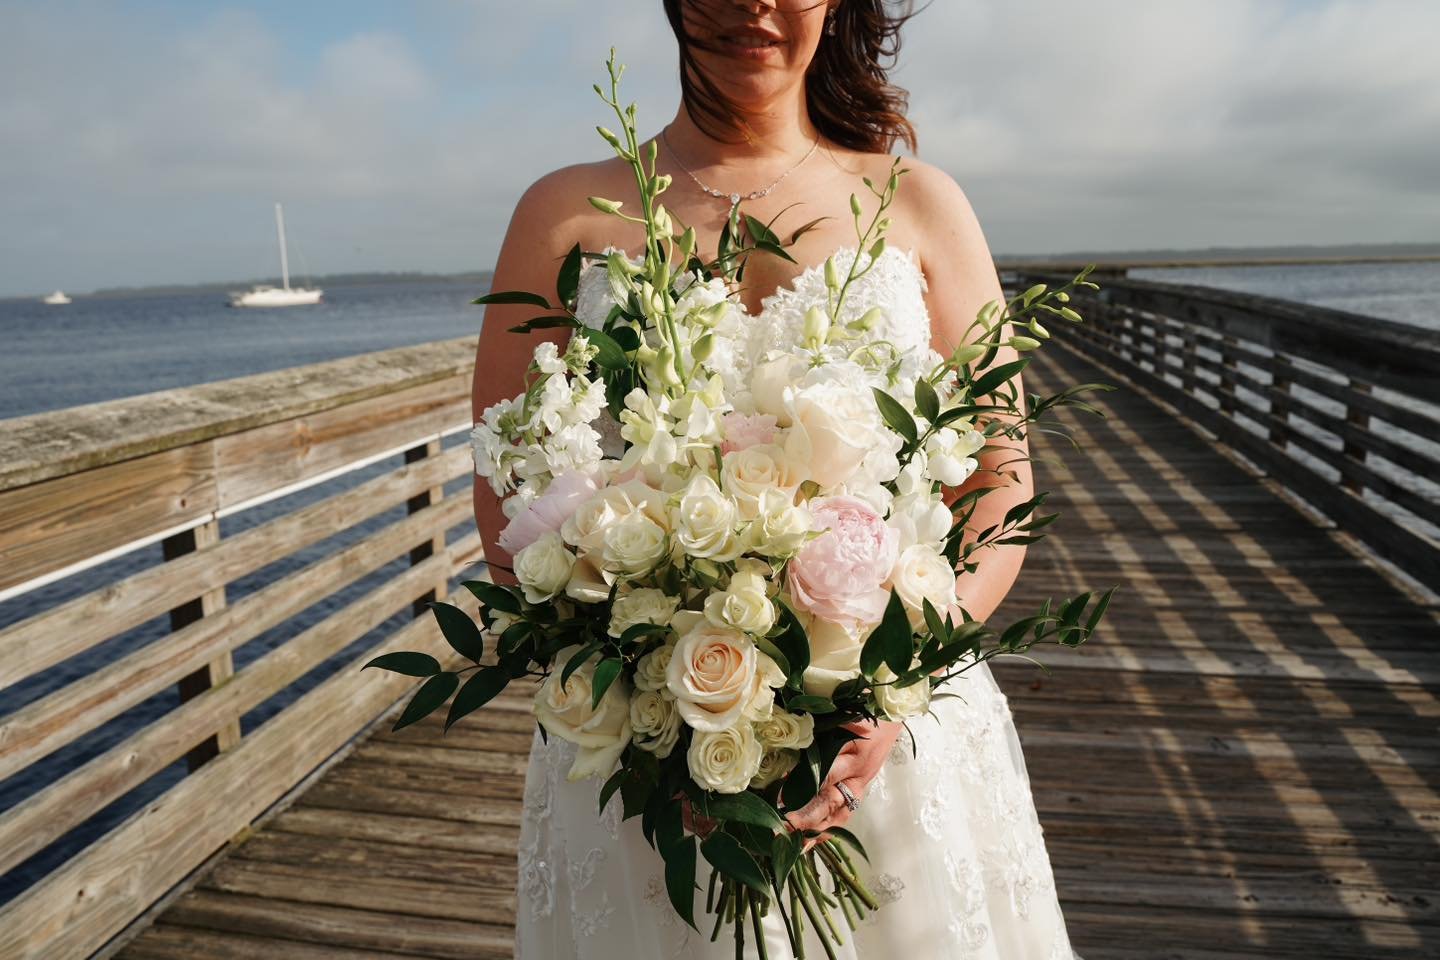 Embracing the essence of love and beauty in every petal of her bouquet. 💐✨

💐 @kingsbayflowers1 
.
.
.
#daresayweddings #BrideBouquet #LoveInBloom #weddingflowers #weddingphotography